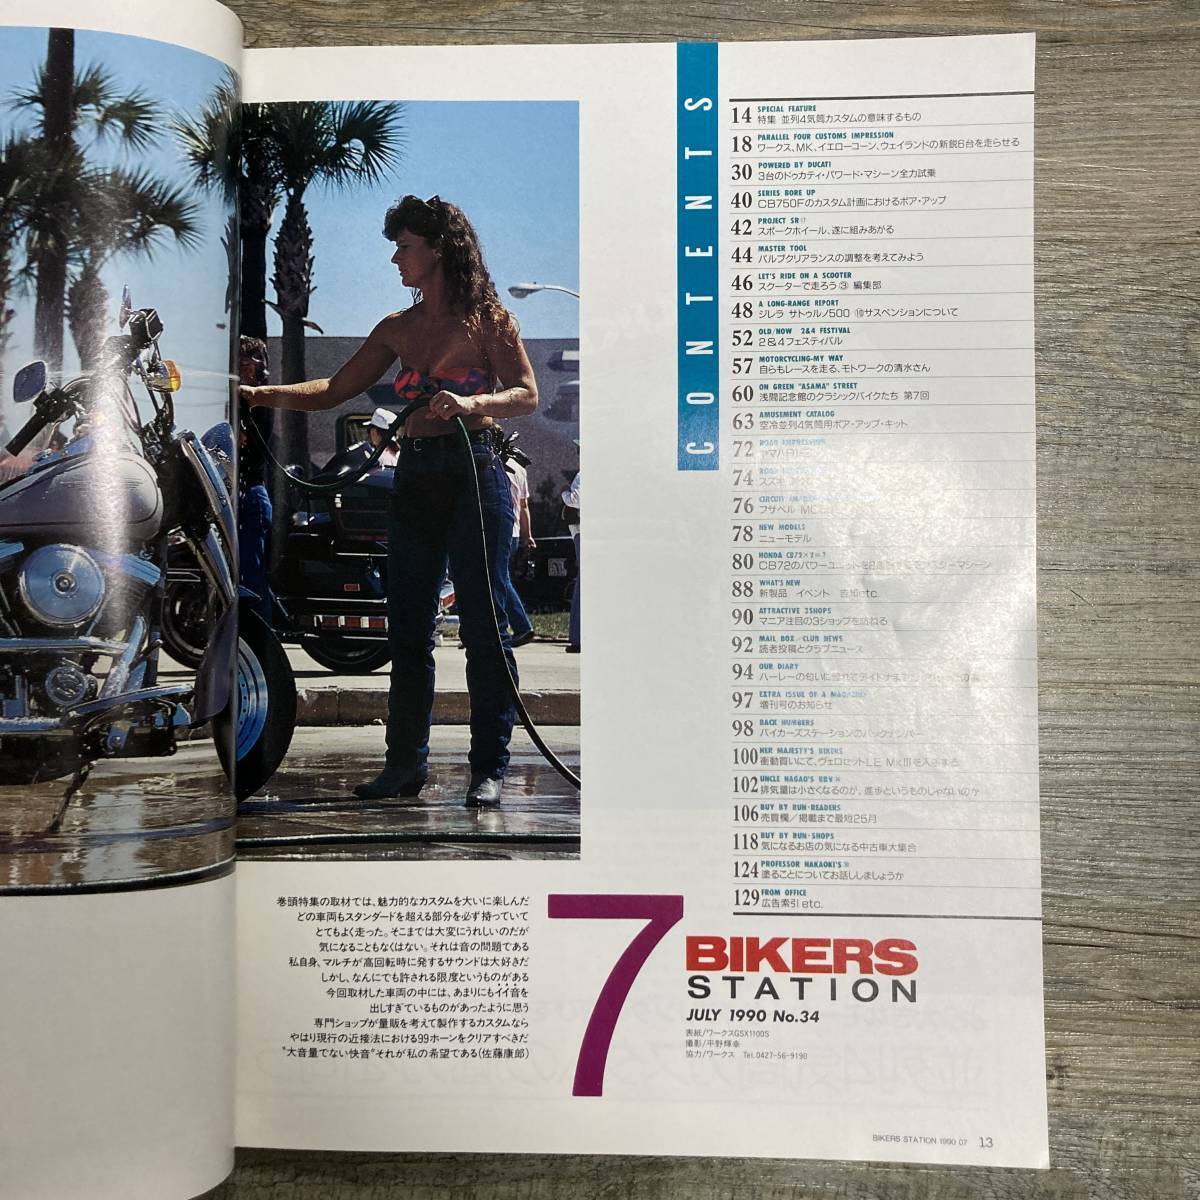 S-2728■BIKERS STATION No.34 1990年7月■特集 並列4気筒カスタム■自動二輪雑誌 オートバイ情報誌■_画像3